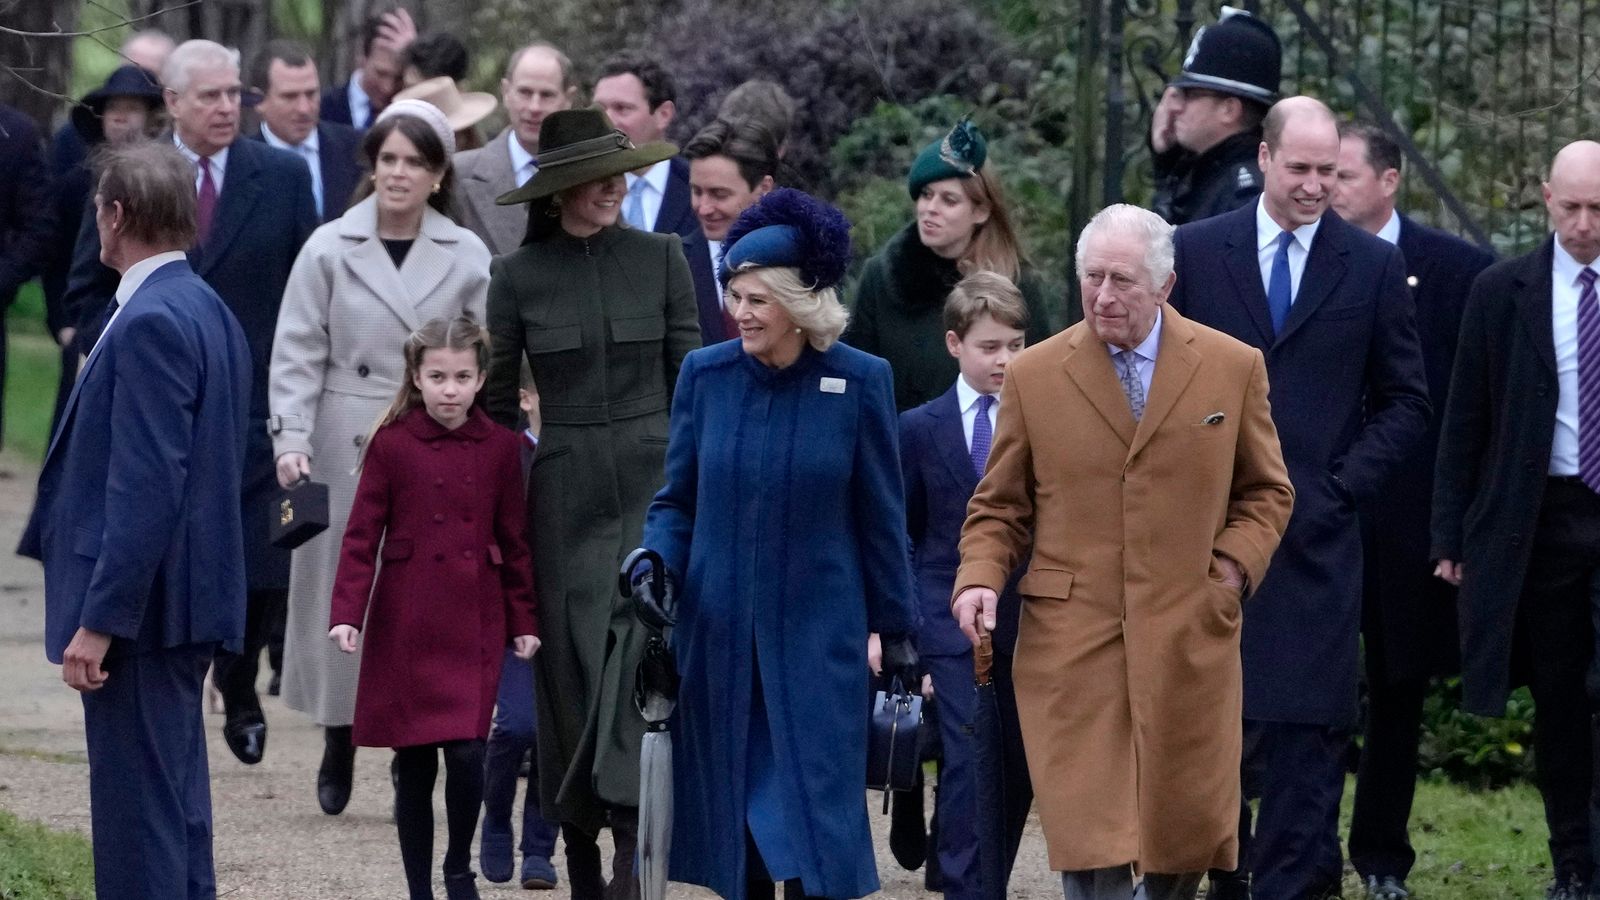 Royal Family members arrive at Sandringham church for Christmas Day